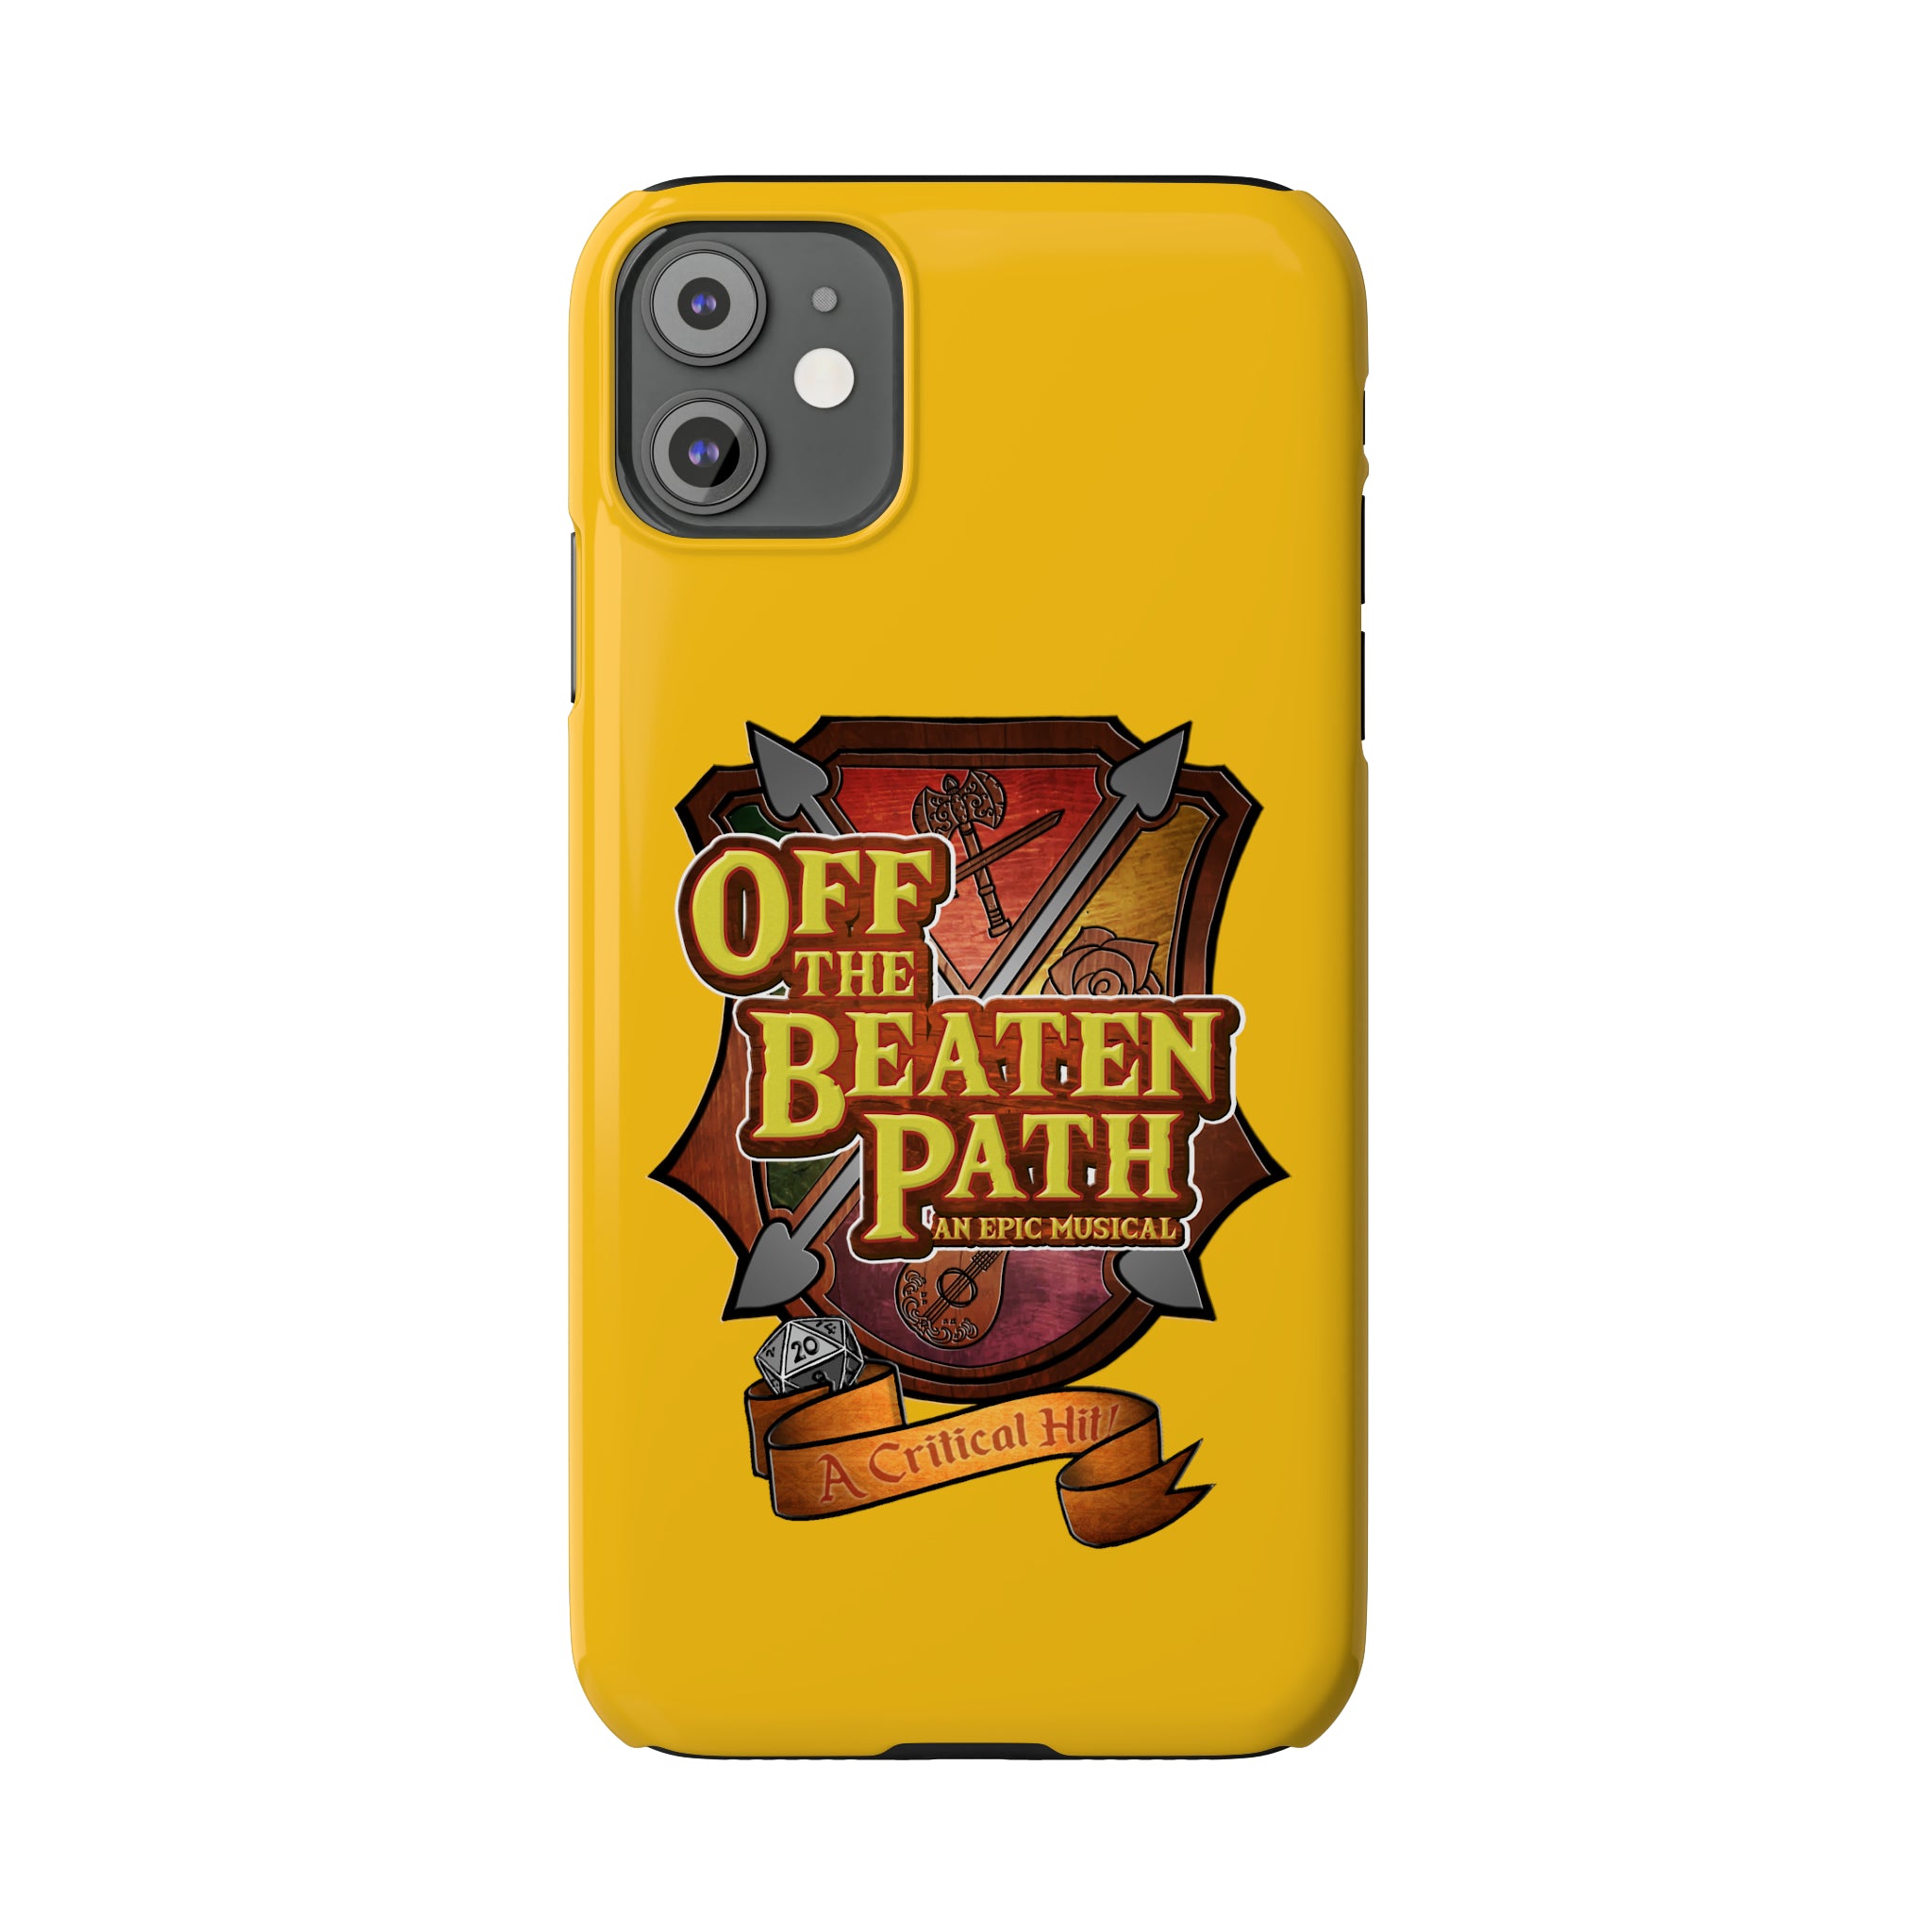 OBP Crest Case Mate Slim Phone Case - Yellow